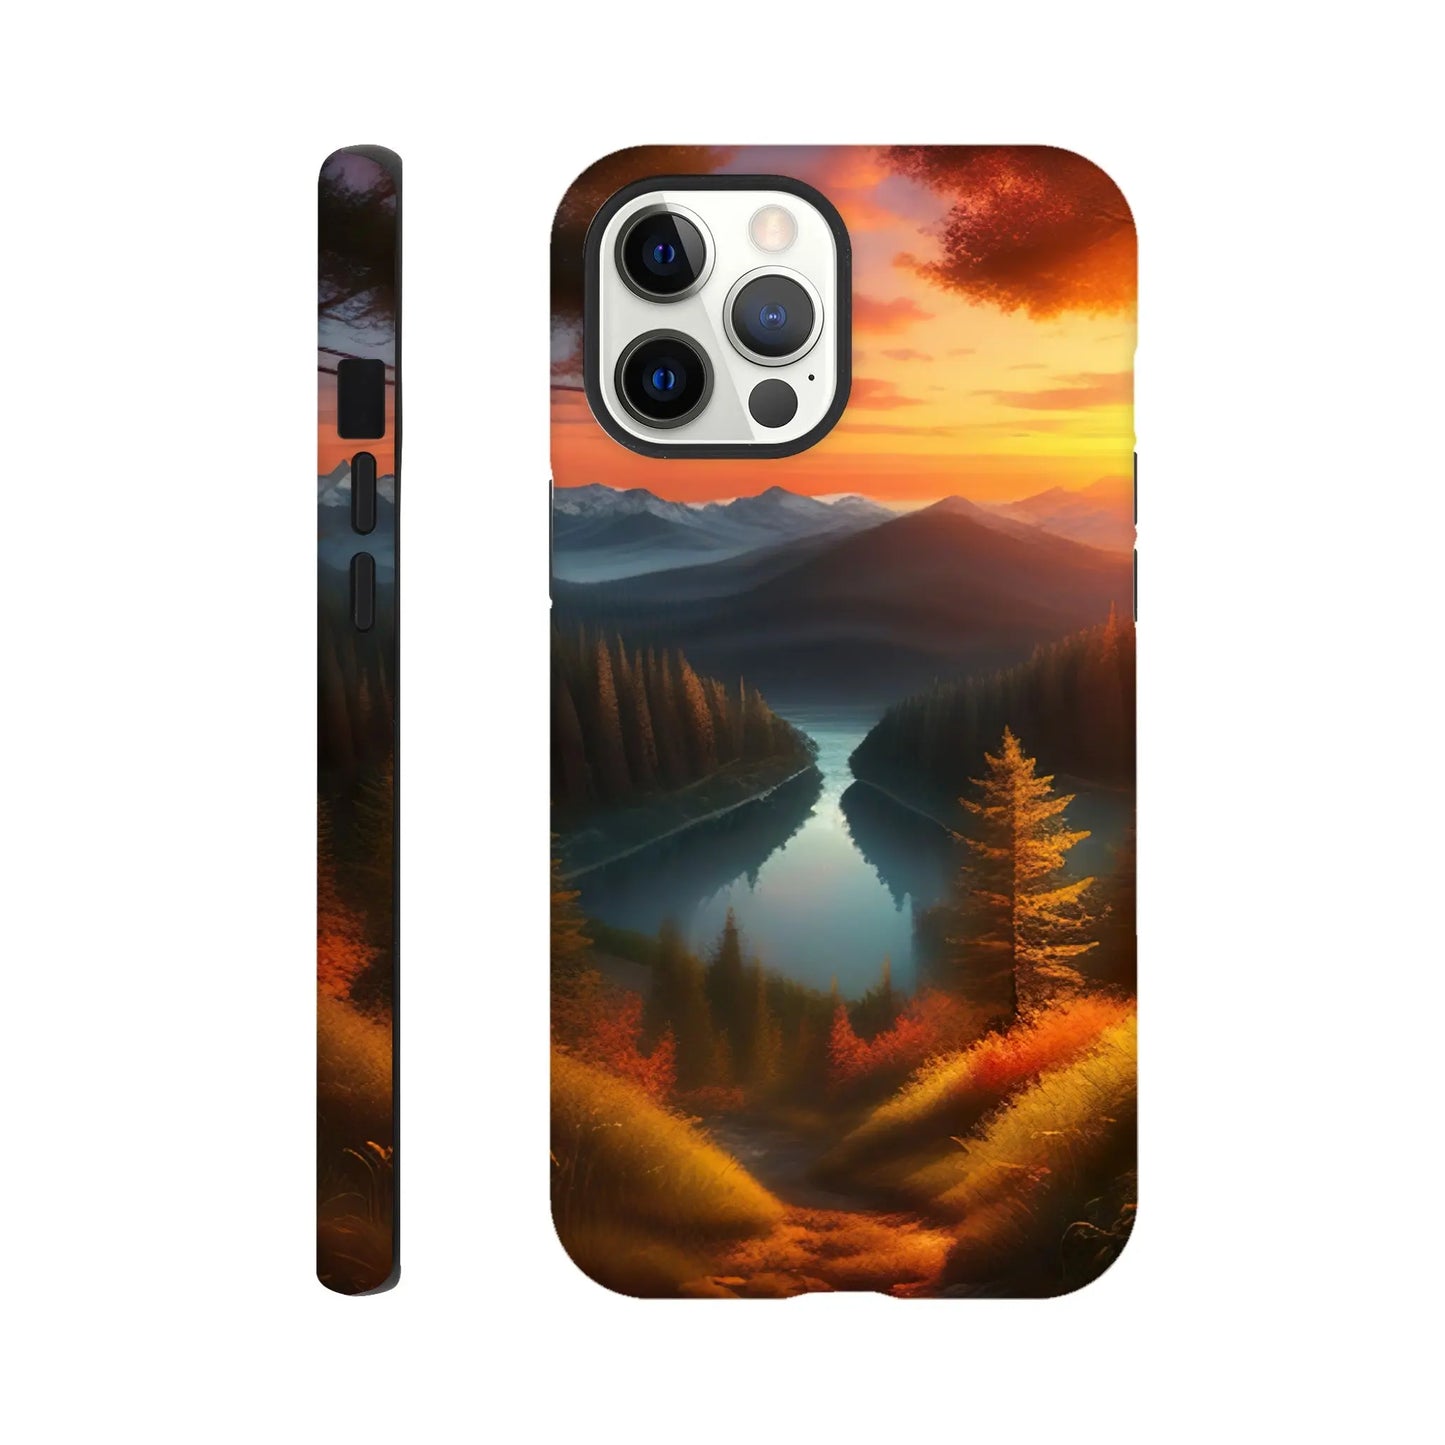 Smartphone-Hülle "Hart" - Bergpanorama - Digitaler Stil, KI-Kunst RolConArt, Landschaften, iPhone-12-Pro-Max